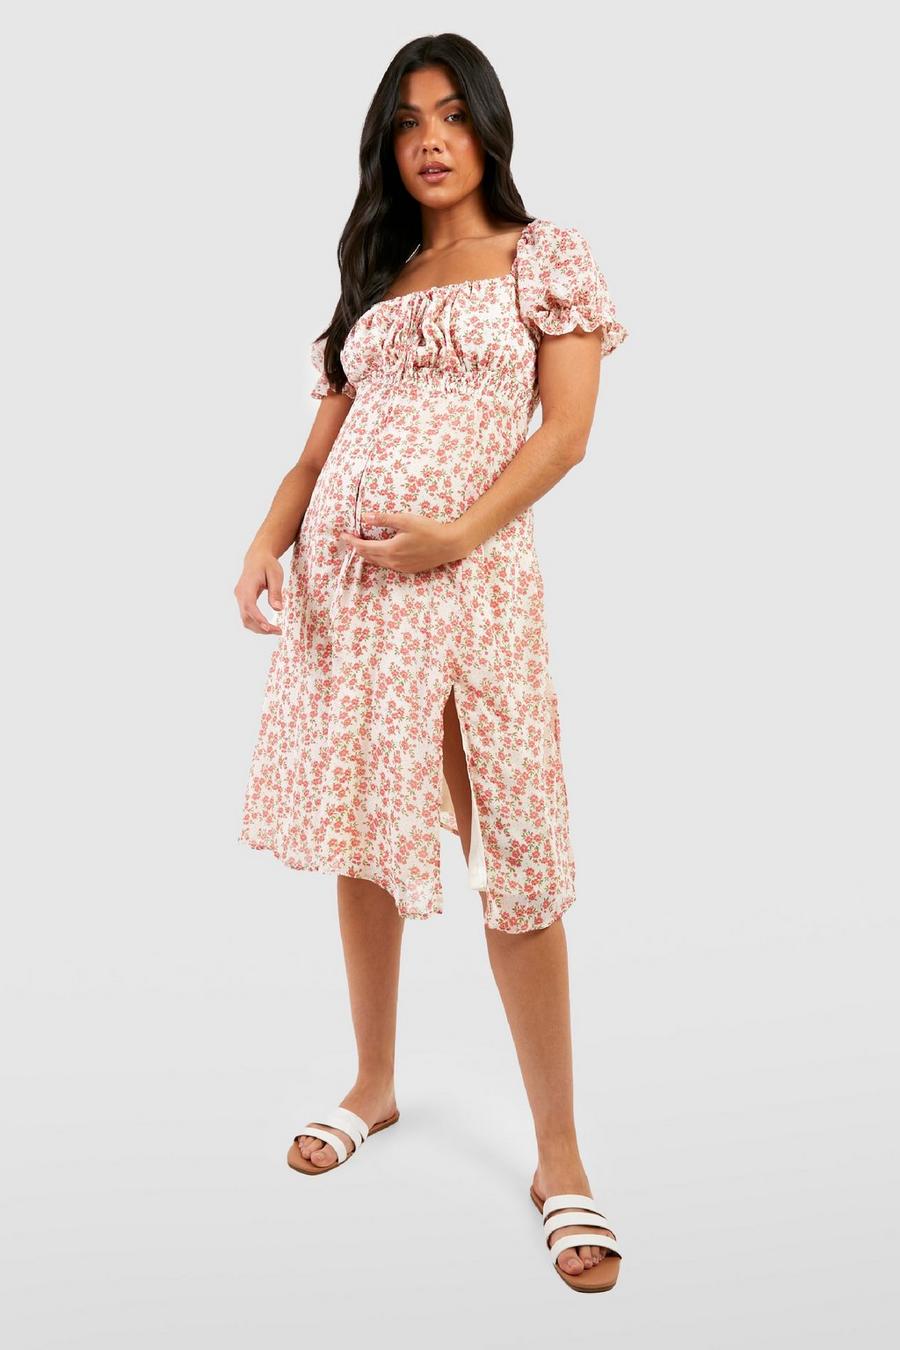 Tesco Maternity Clothes